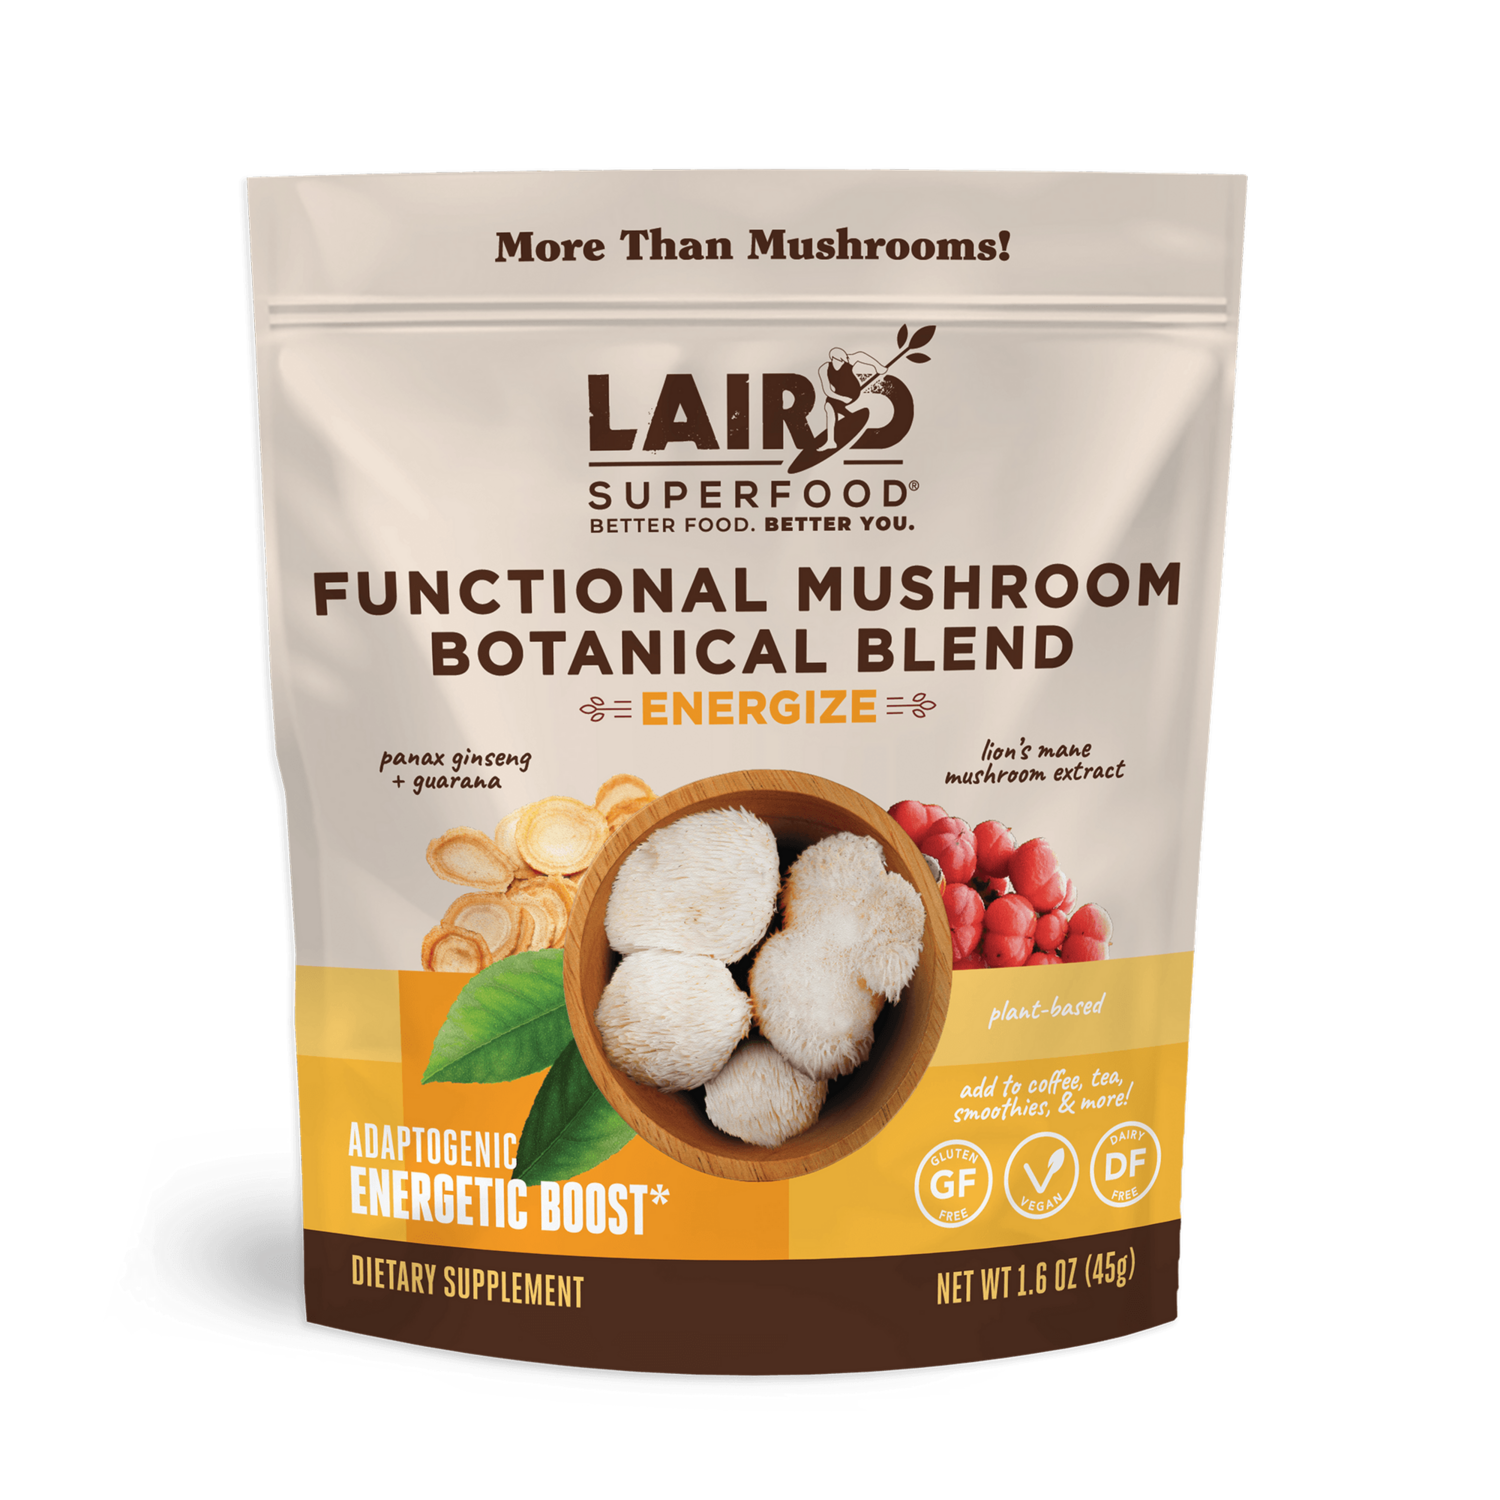 Laird SuperFood® Functional Mushroom Botanical Blend - Adaptogenic Energetic Boost